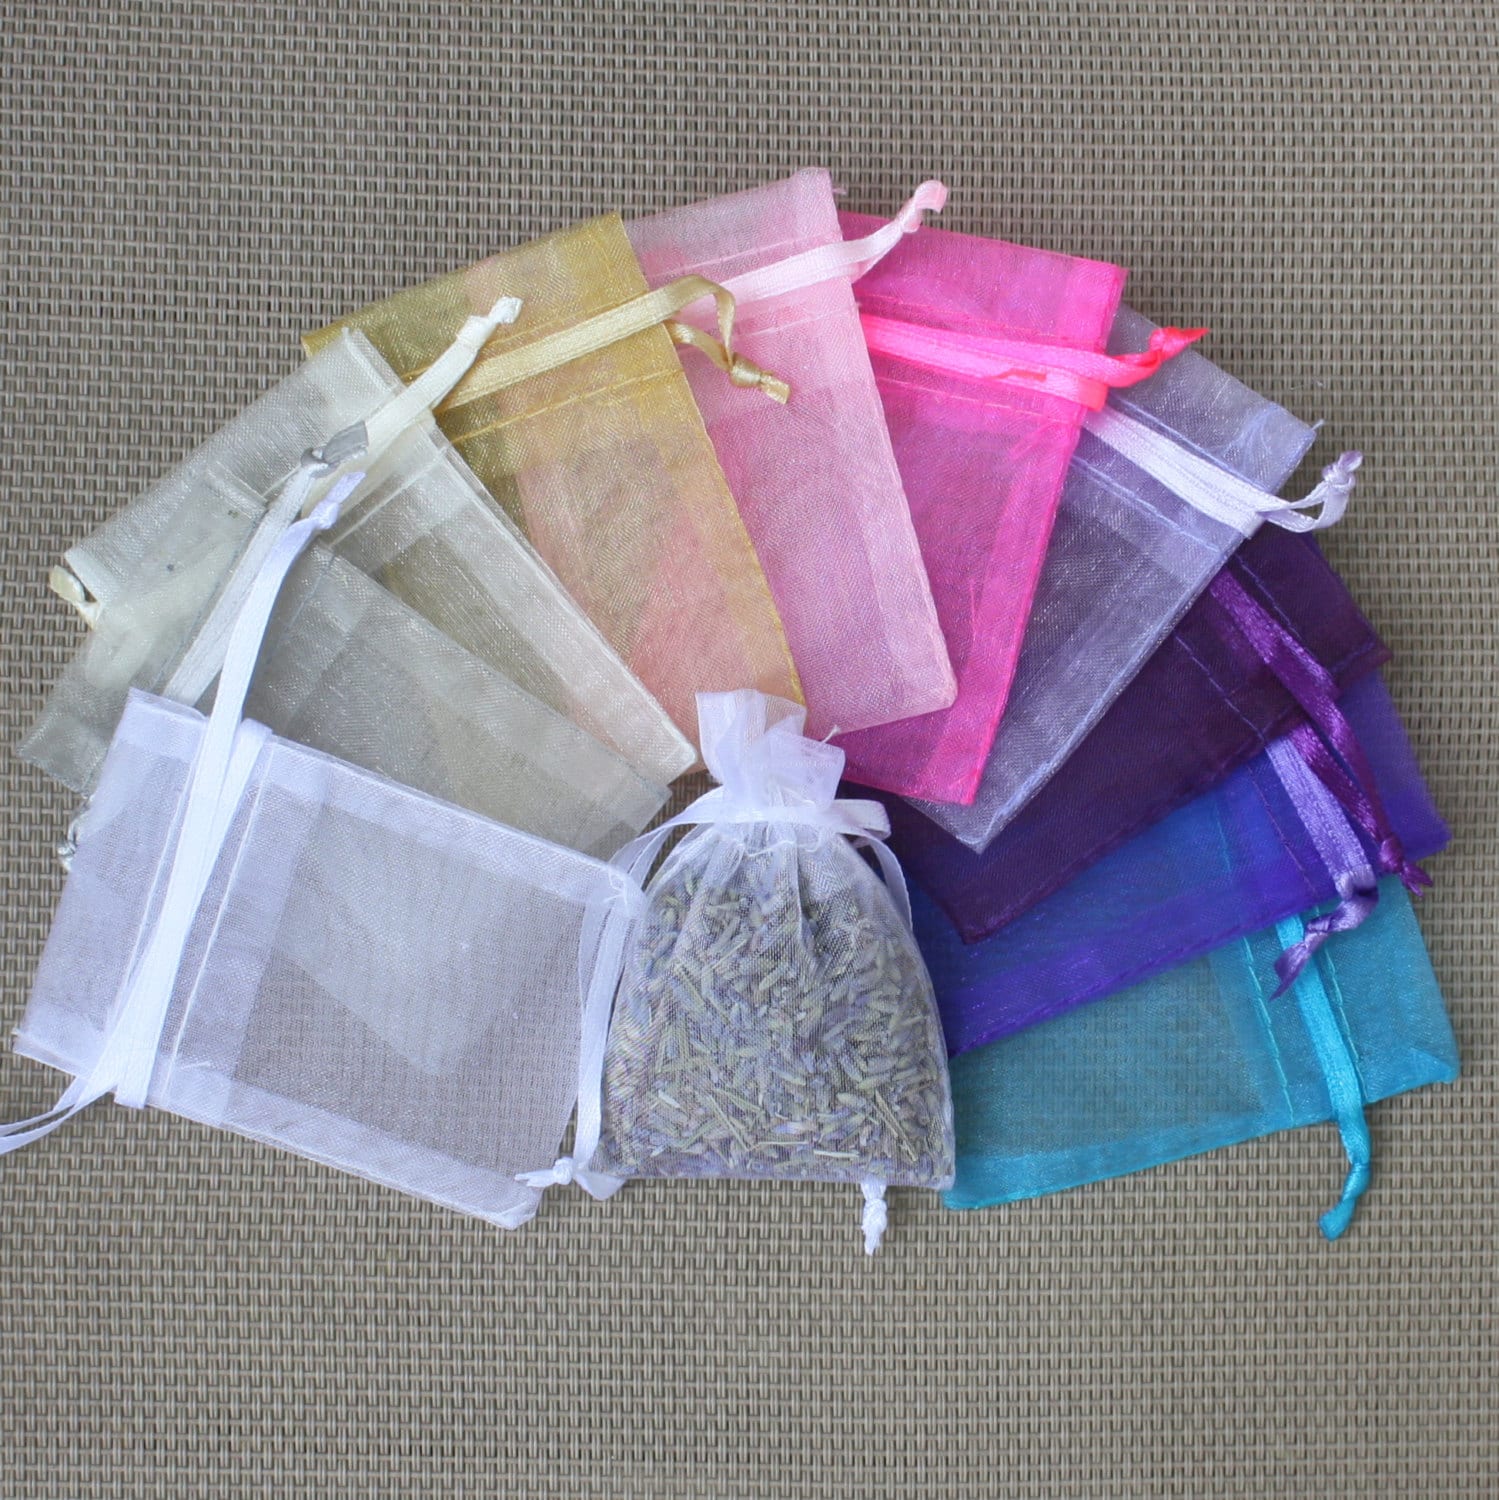 Download 10 Lavender Sachet Bags Choose Color For Wedding Toss or